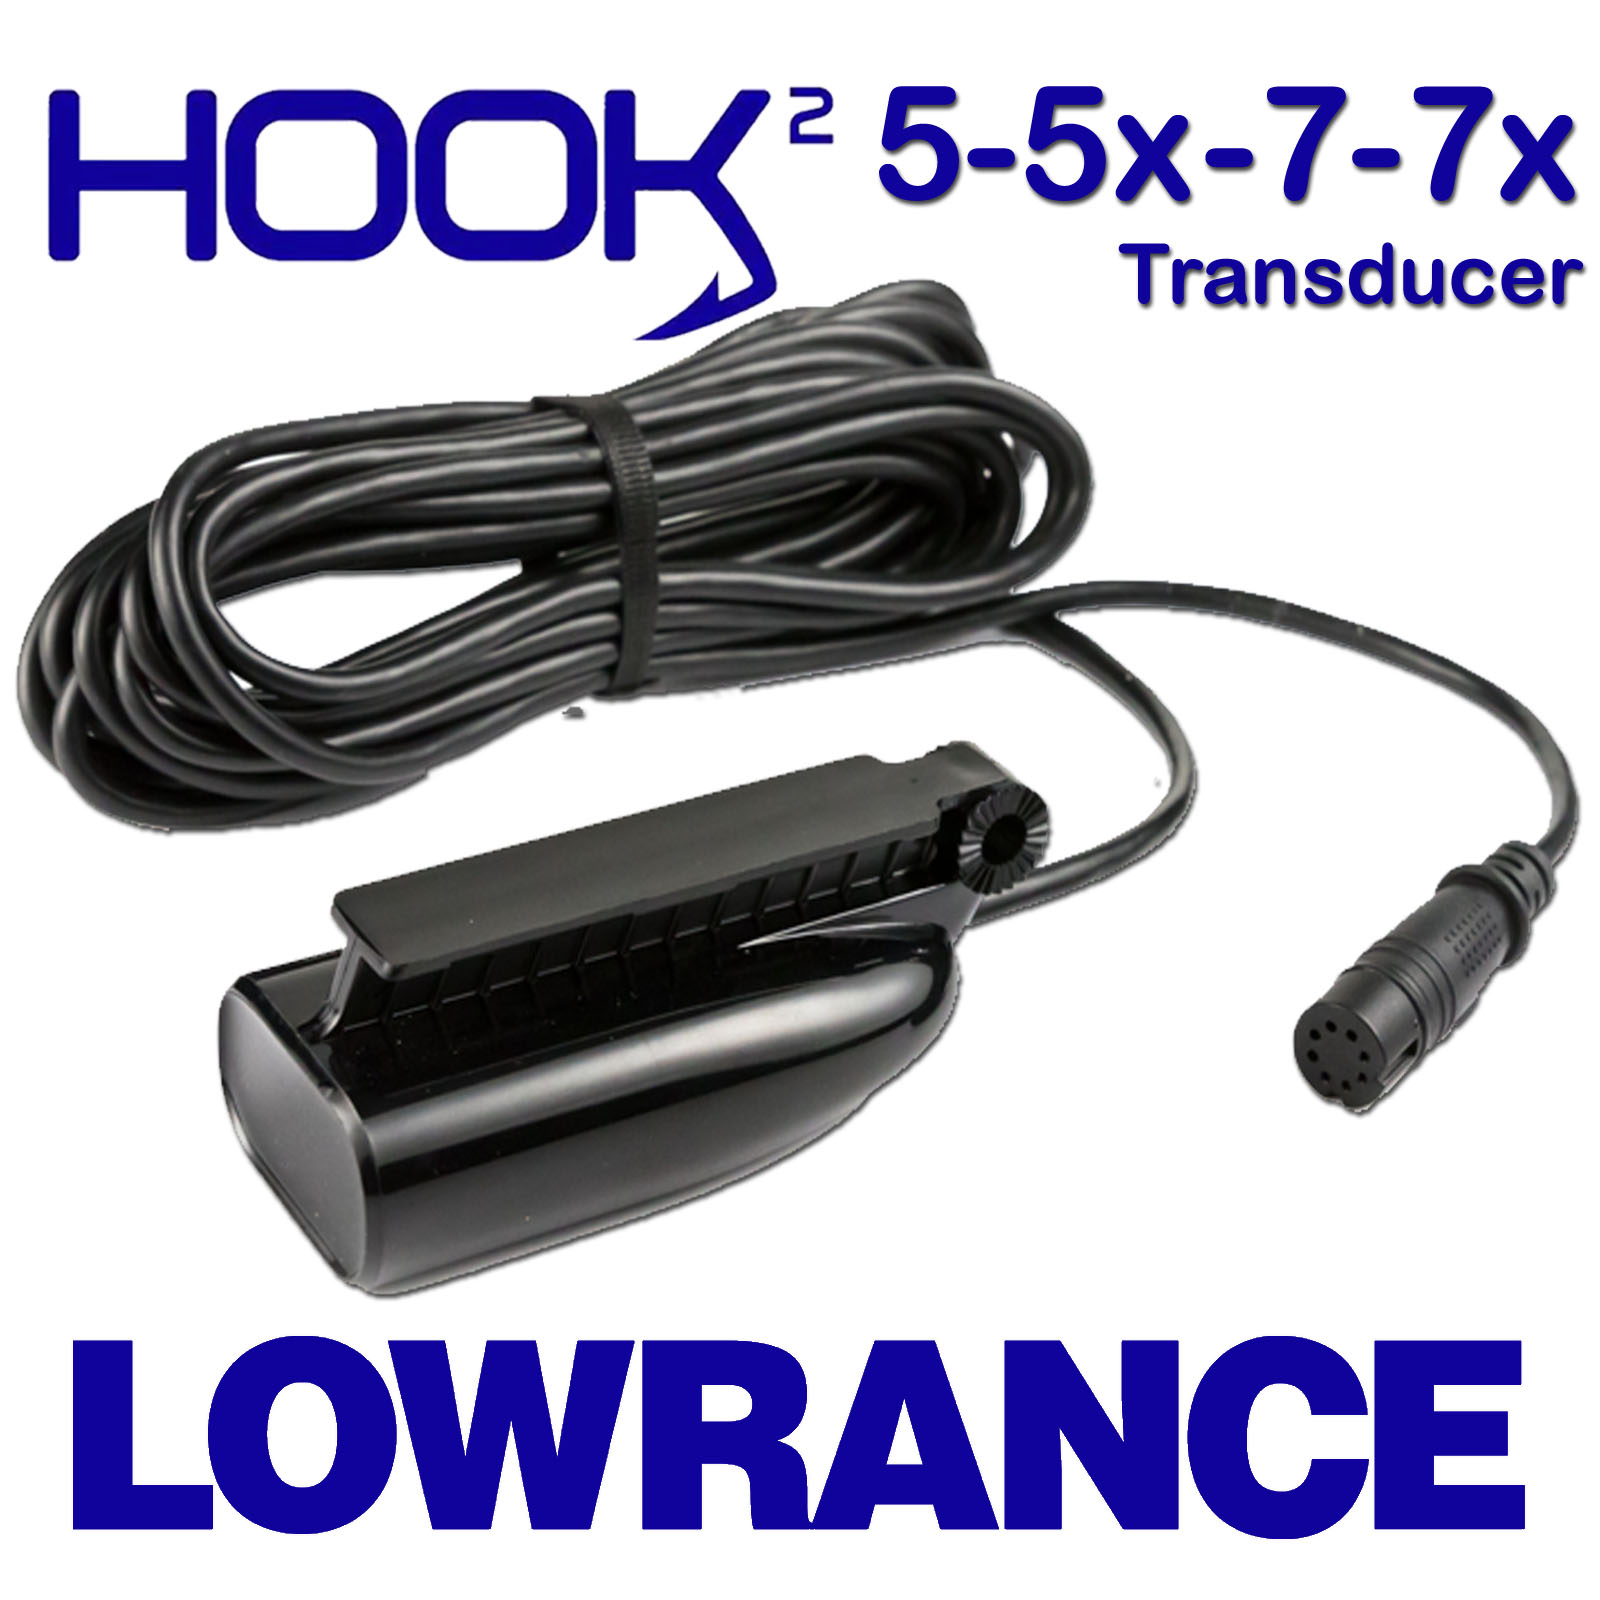 Lowrance Splitshot Skimmer Transducer Suits Hook2 5x, 5, 7x, 7